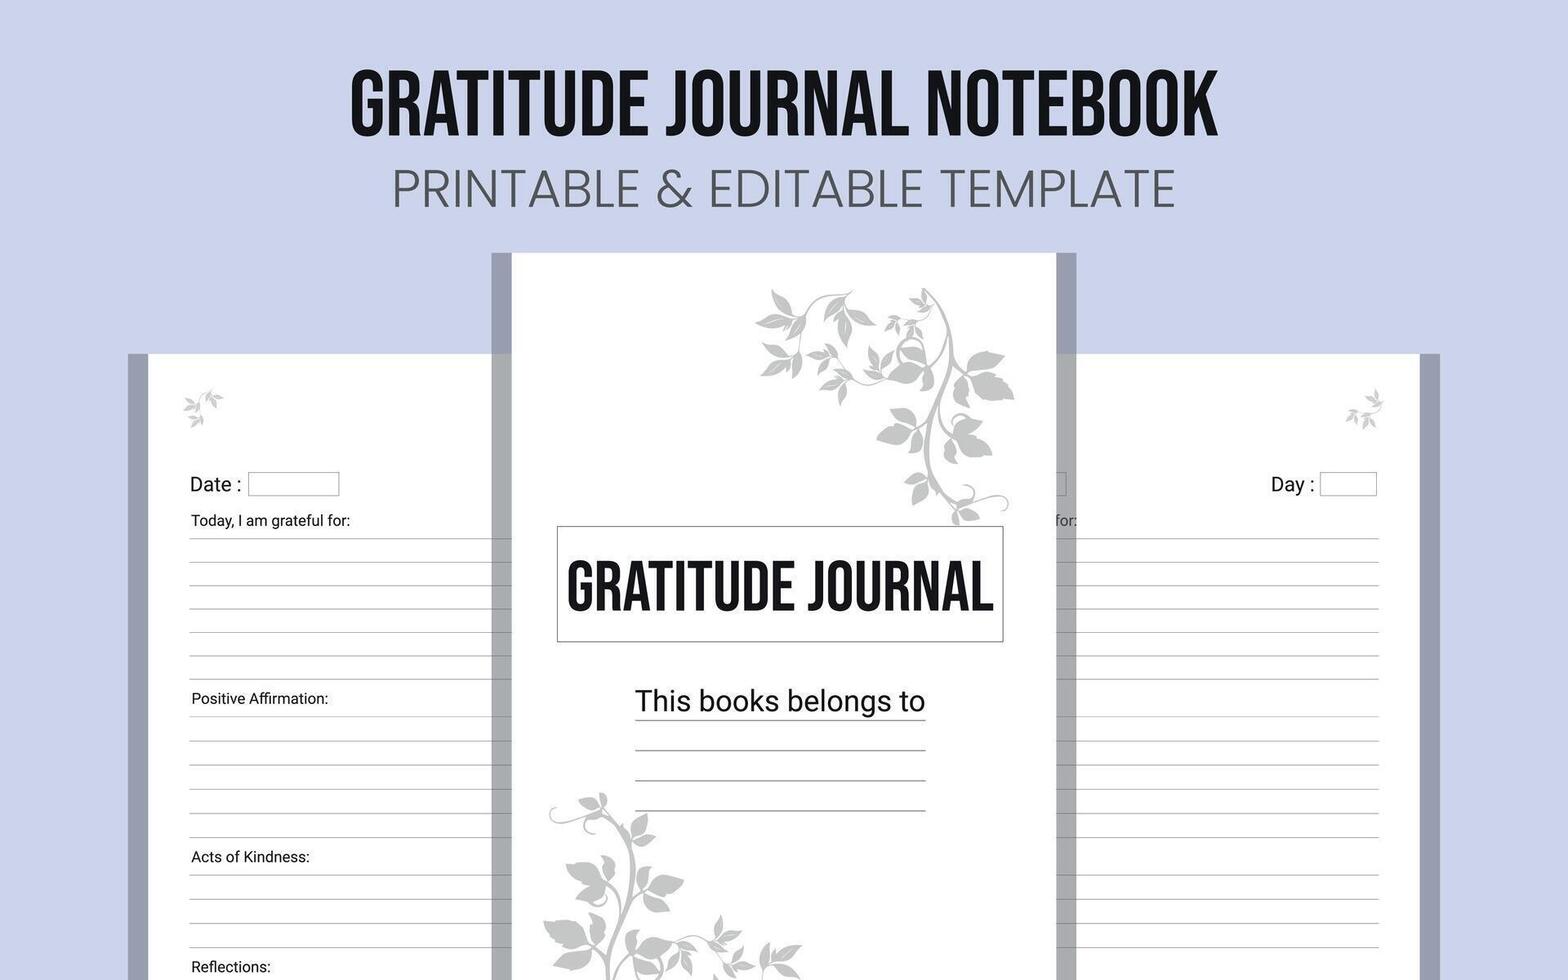 Gratitude journal notebook interior for KDP vector